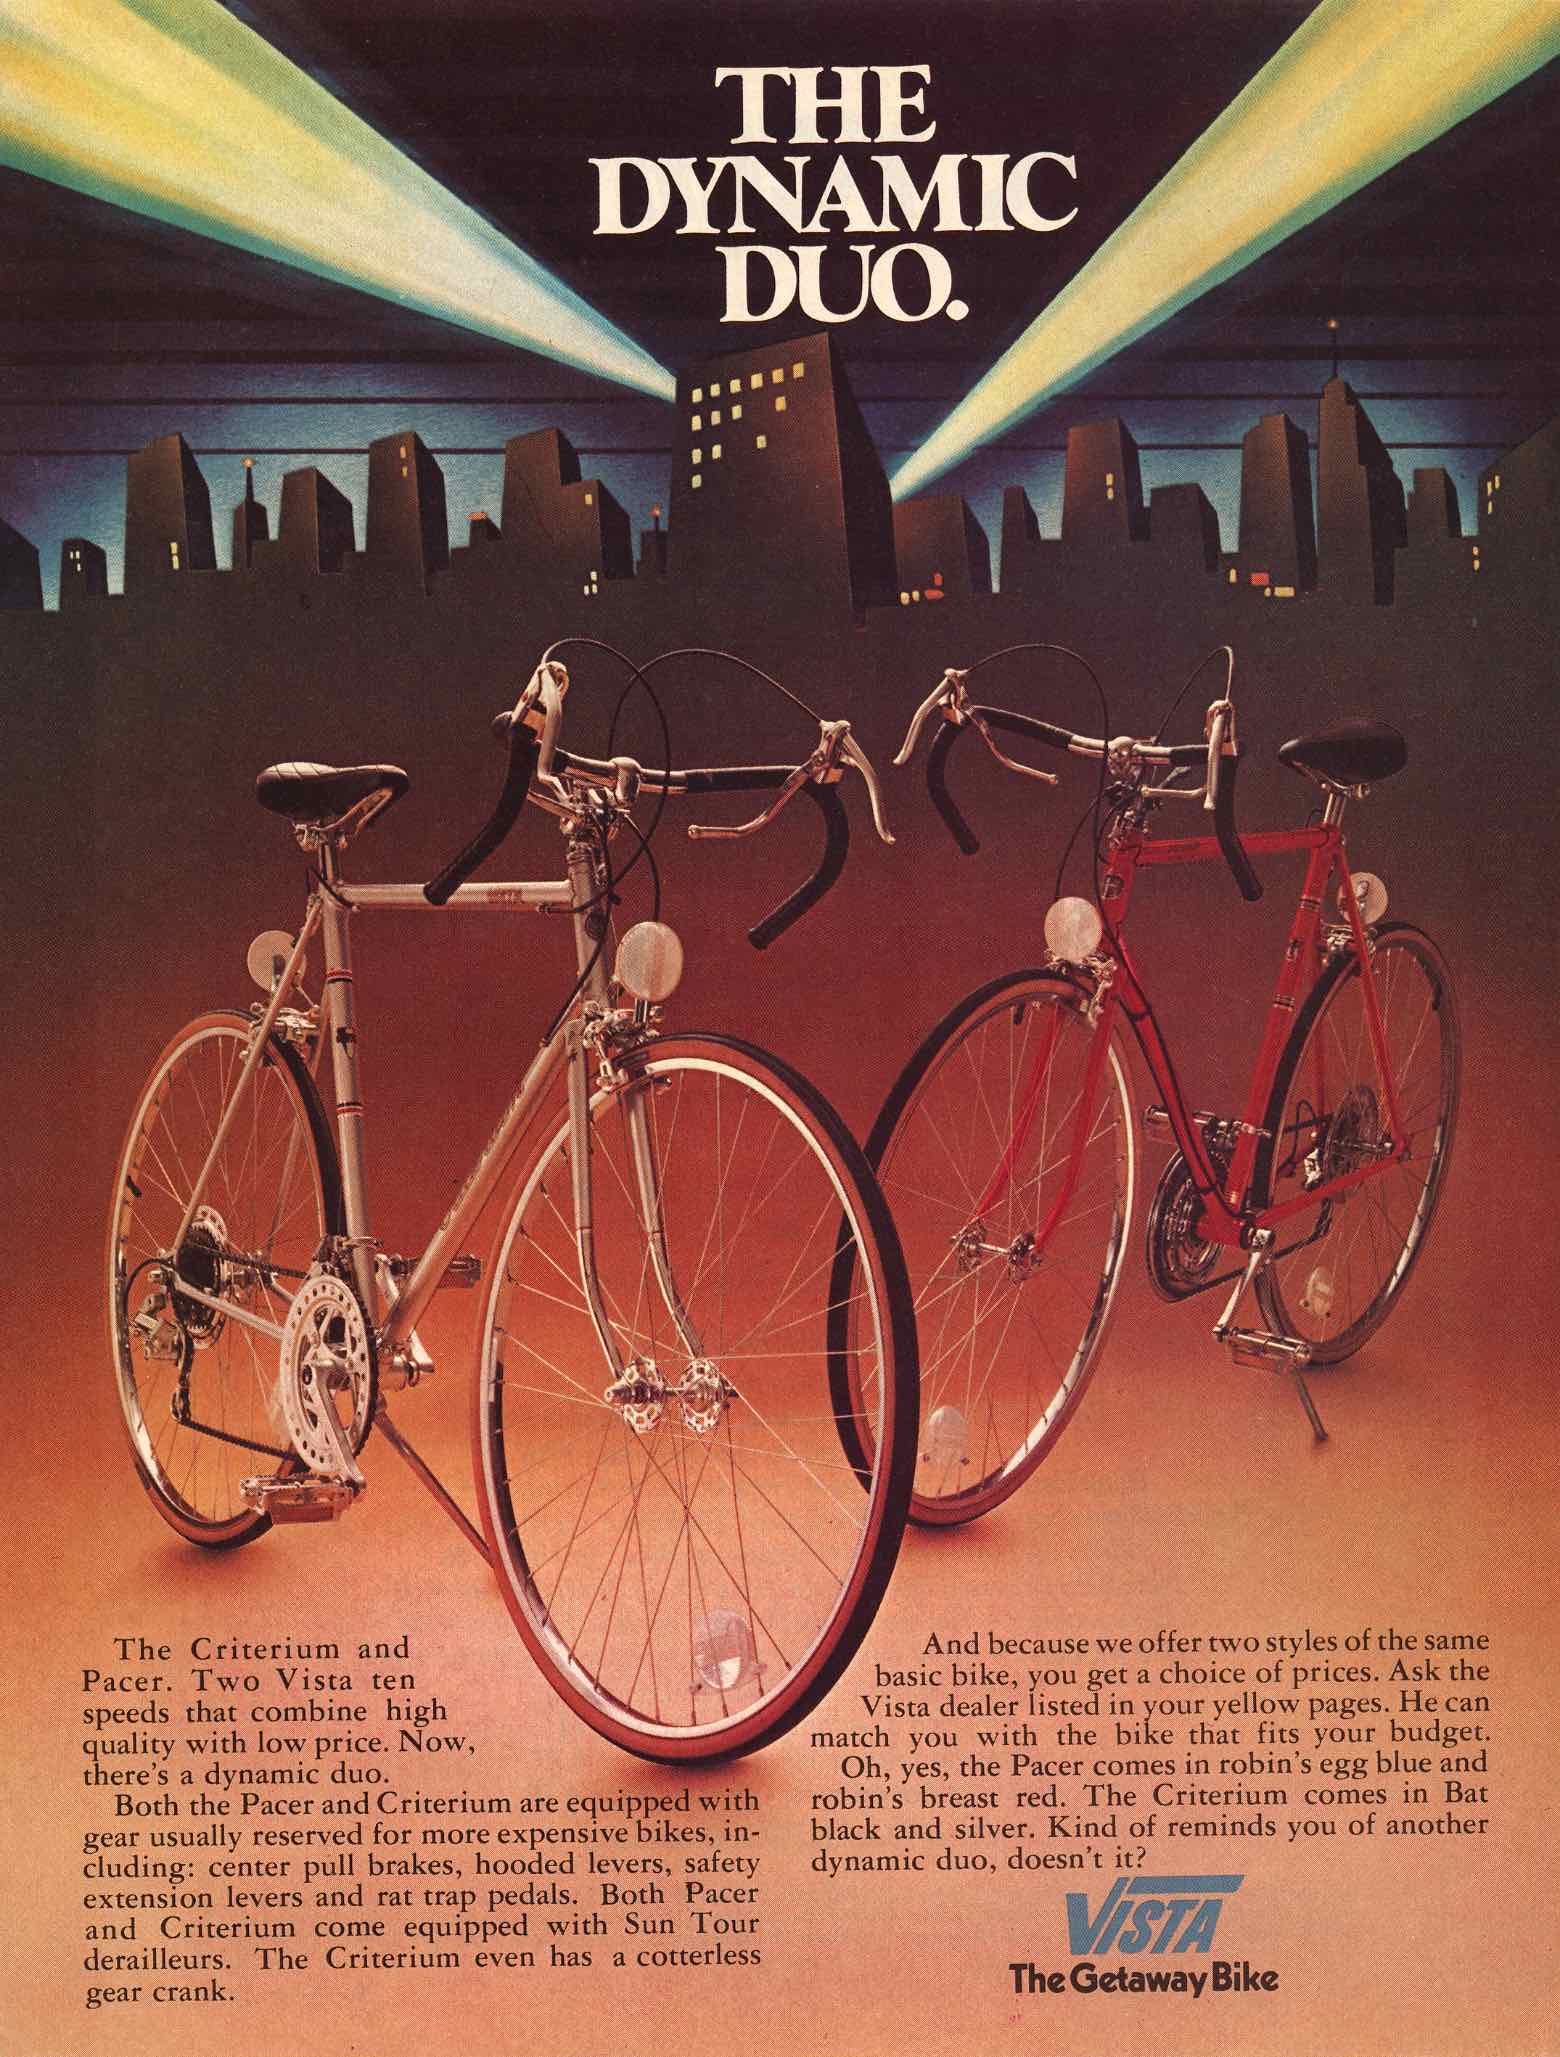 Bicycling 1977 - Vista advert main image